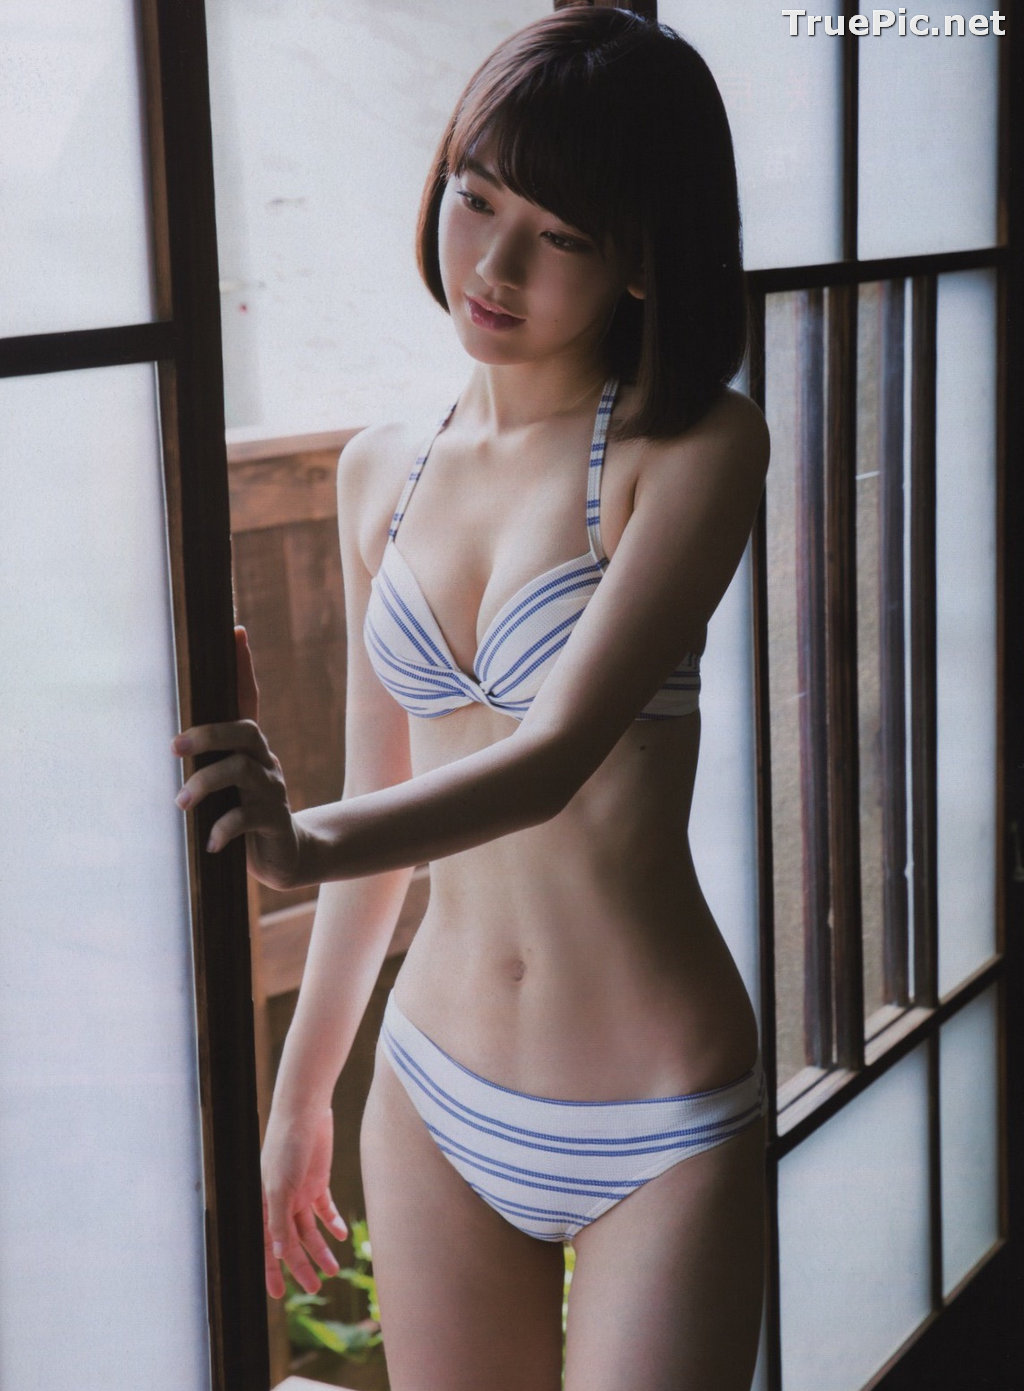 Image Japanese Singer and Actress - Sakura Miyawaki (宮脇咲良) - Sexy Picture Collection 2021 - TruePic.net - Picture-70